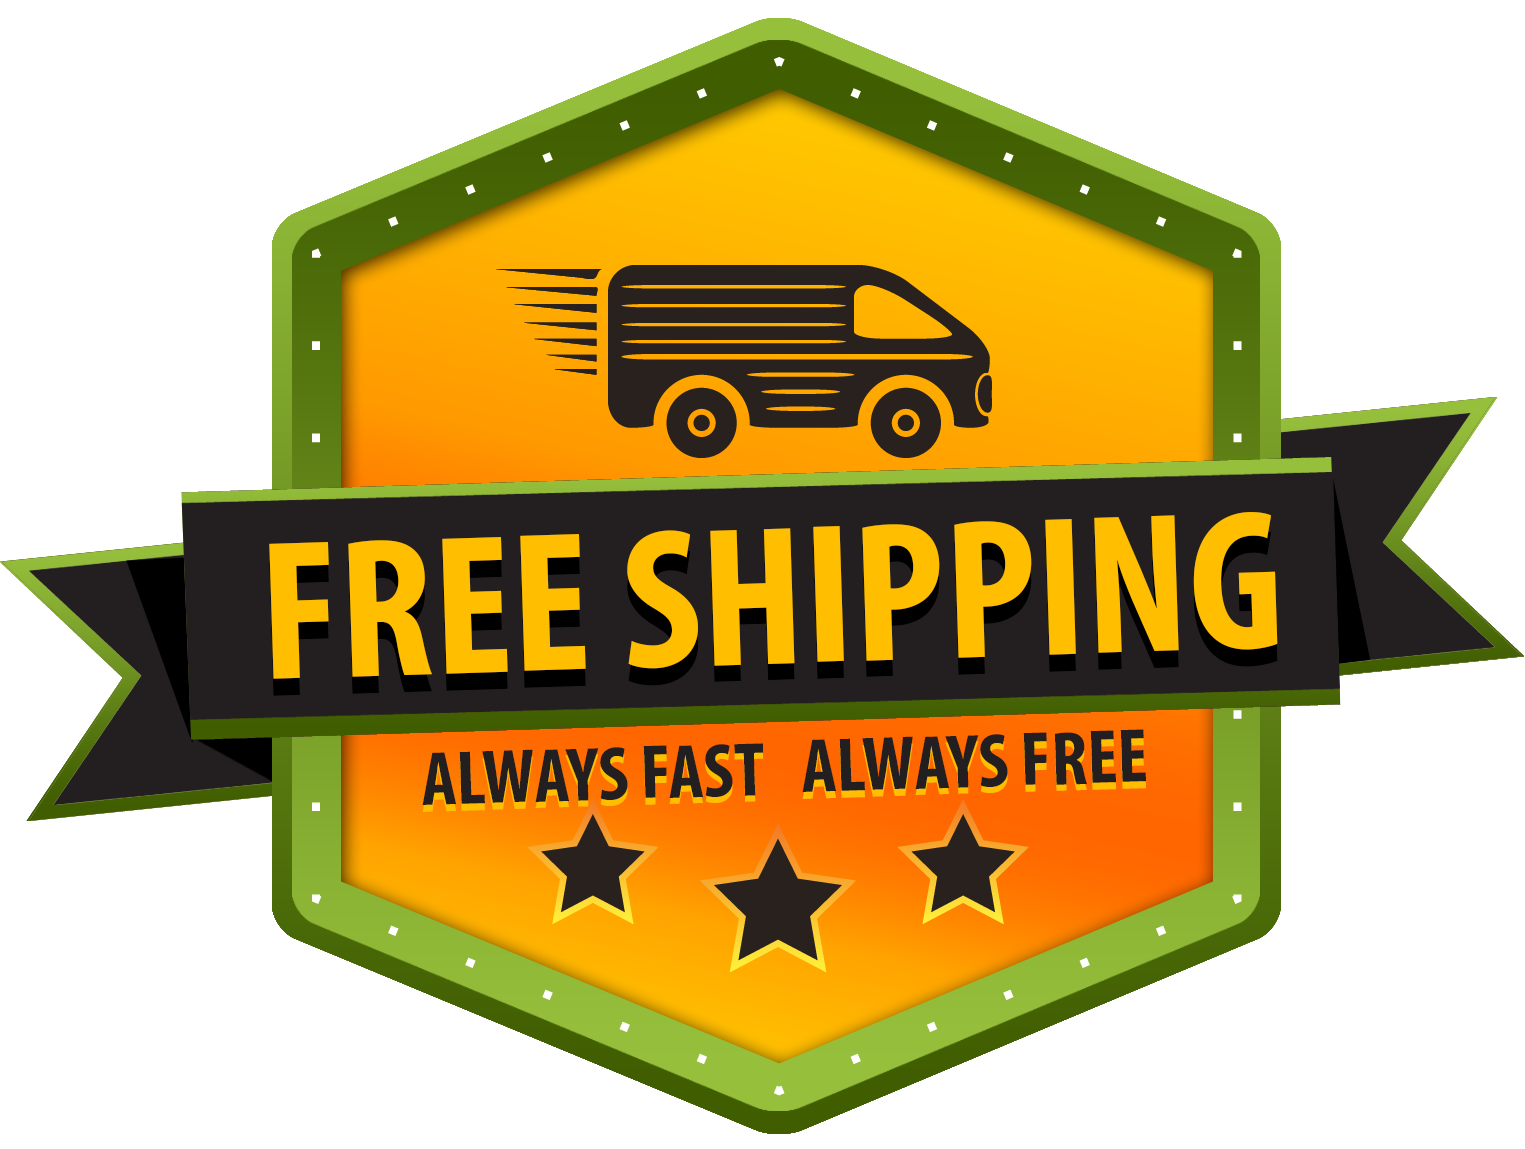 Free Shipping Logo Image PNG Transparent Background, Free Download